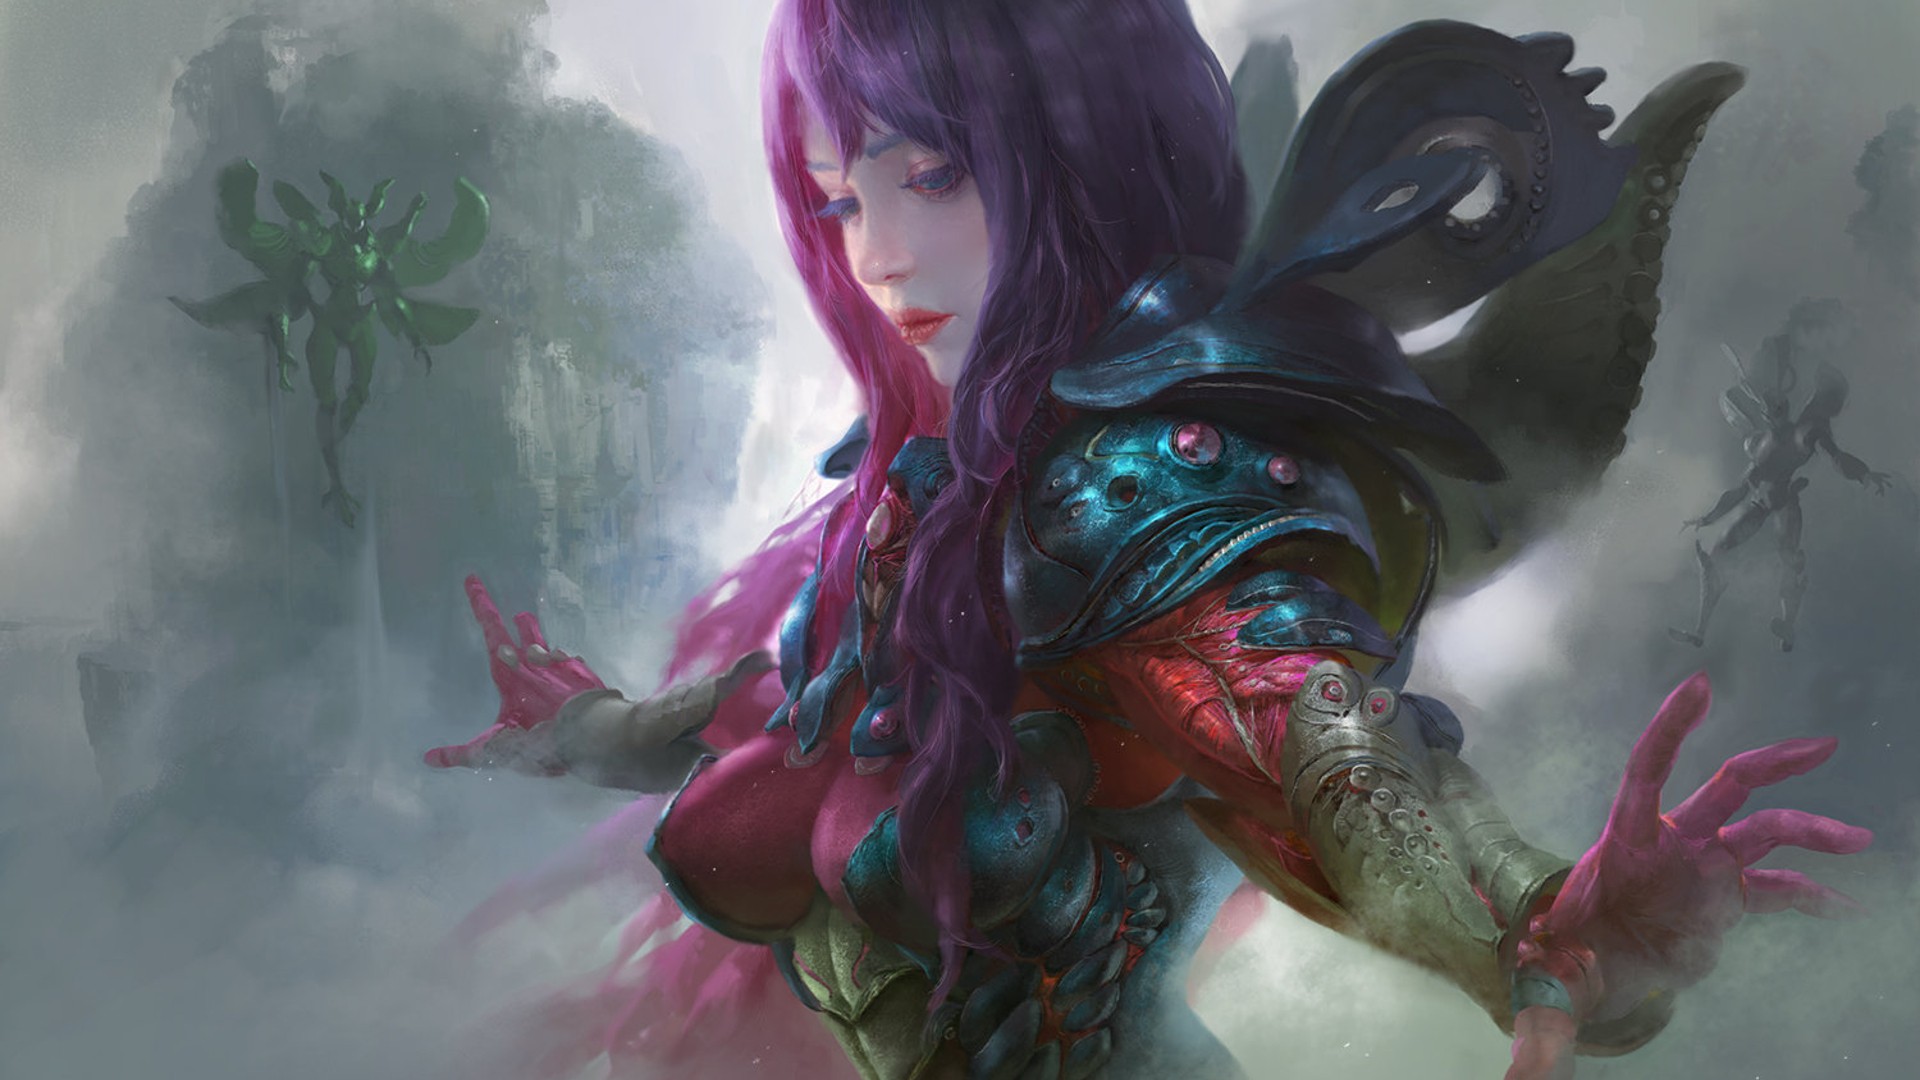 General 1920x1080 digital art fantasy art boobs redhead fantasy girl women purple hair red lipstick fantasy armor armor